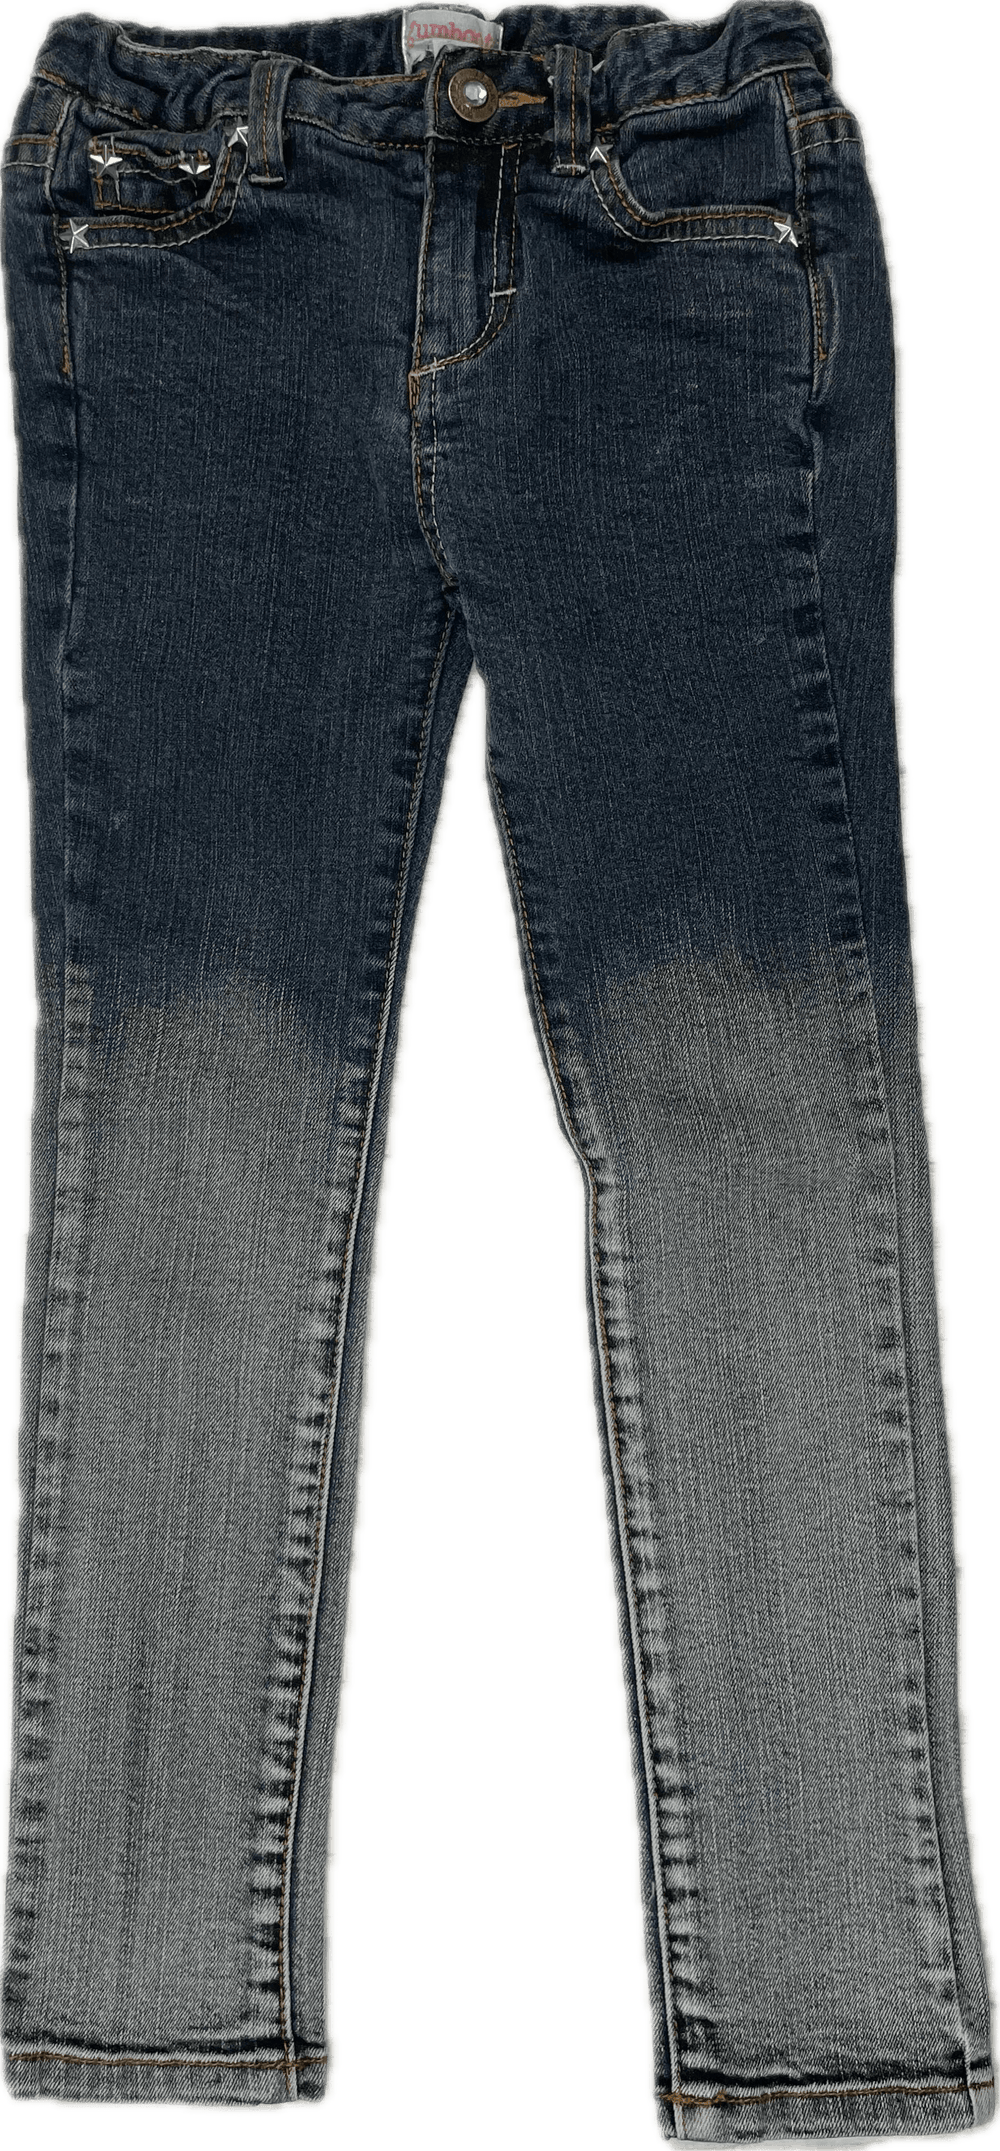 Gumboots Girls Dip Dye Skinny Jeans - Size 5/6Y - Jean Pool